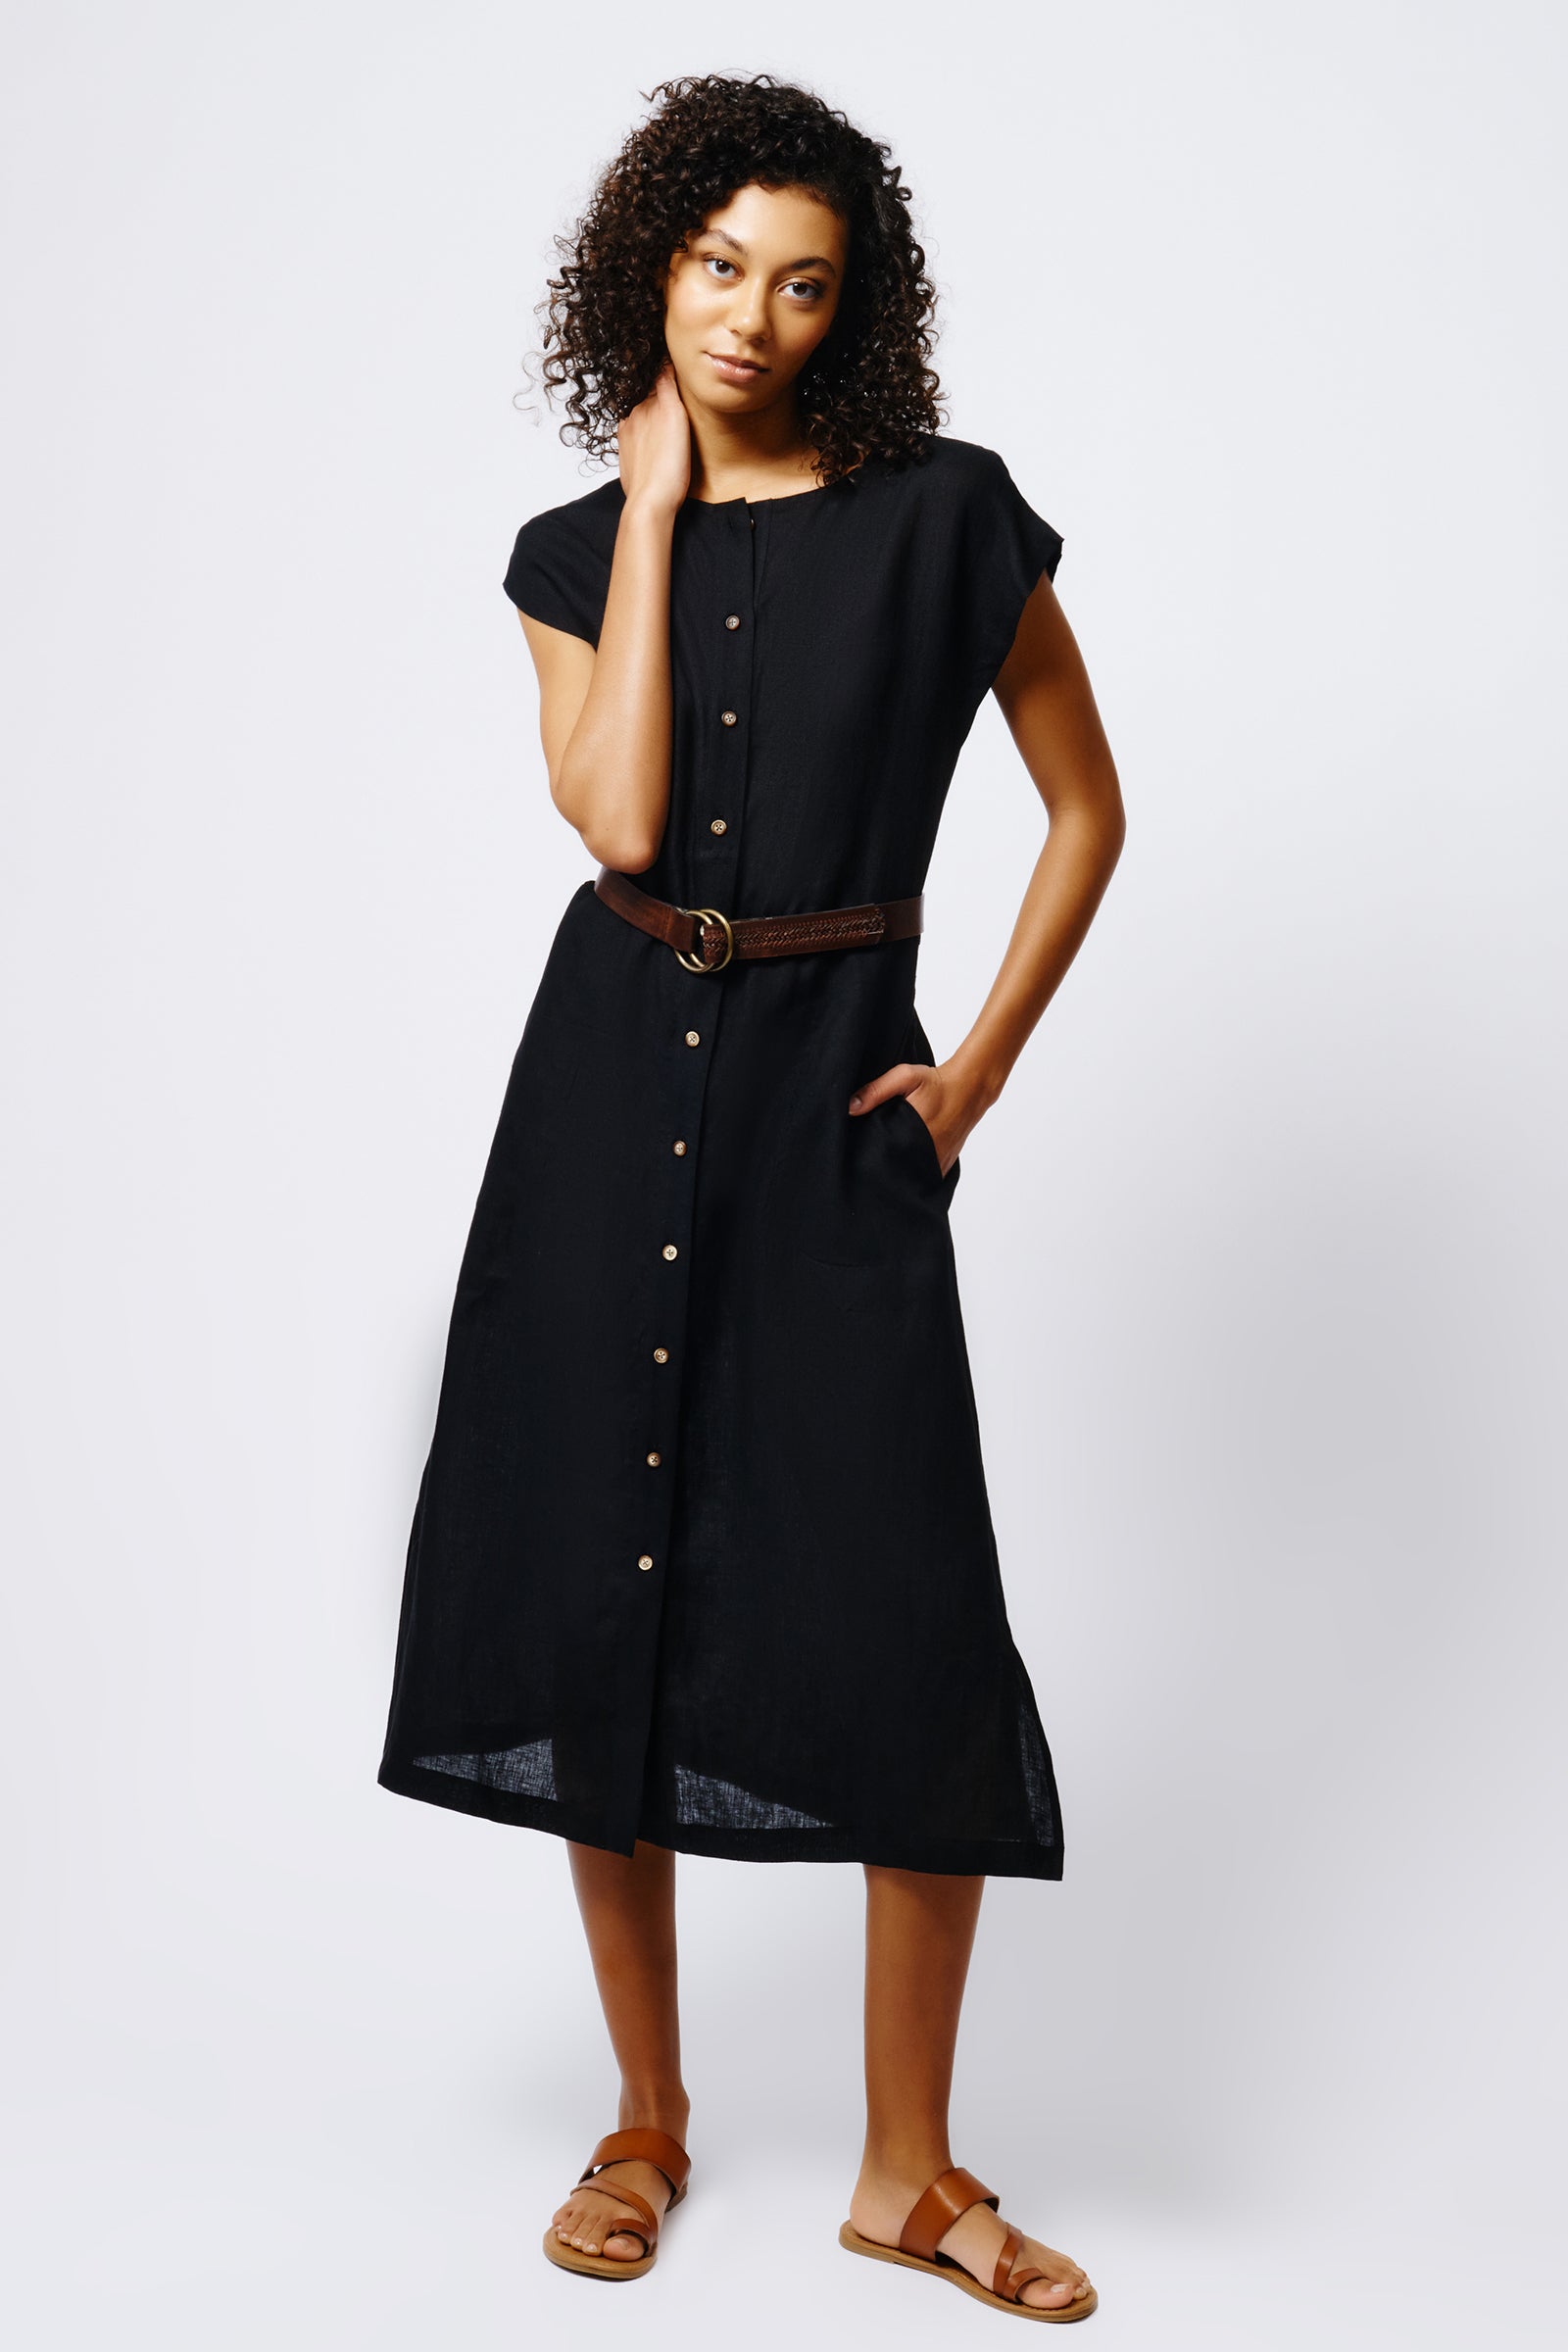 Kal Rieman Harlow Cap Sleeve Dress in Black Linen on Model Full Front View